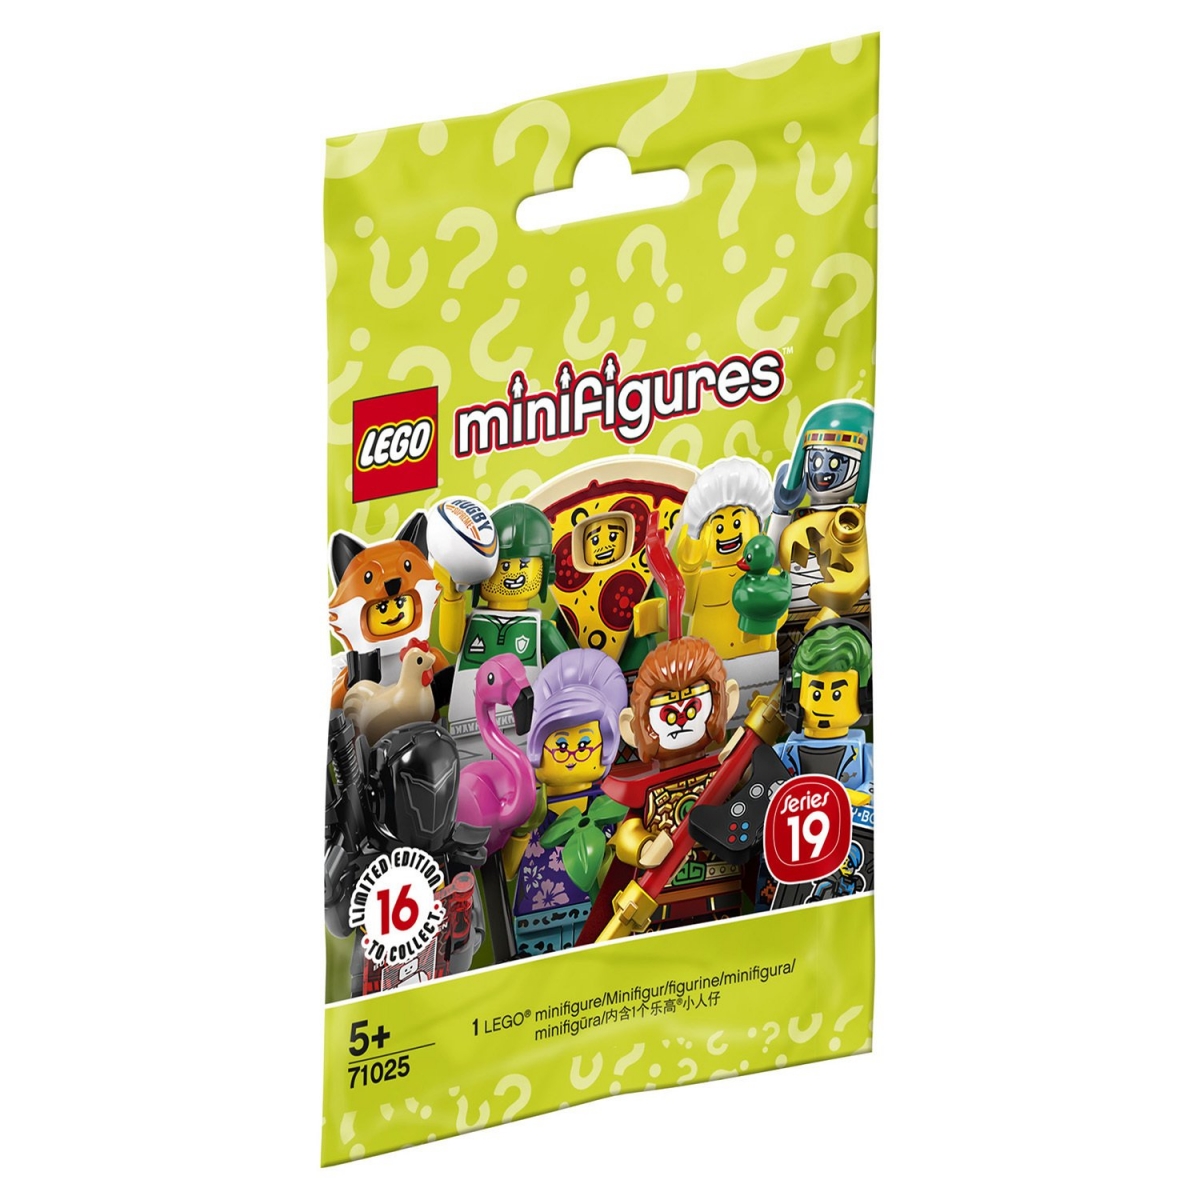   Lego Minifigures  -  19